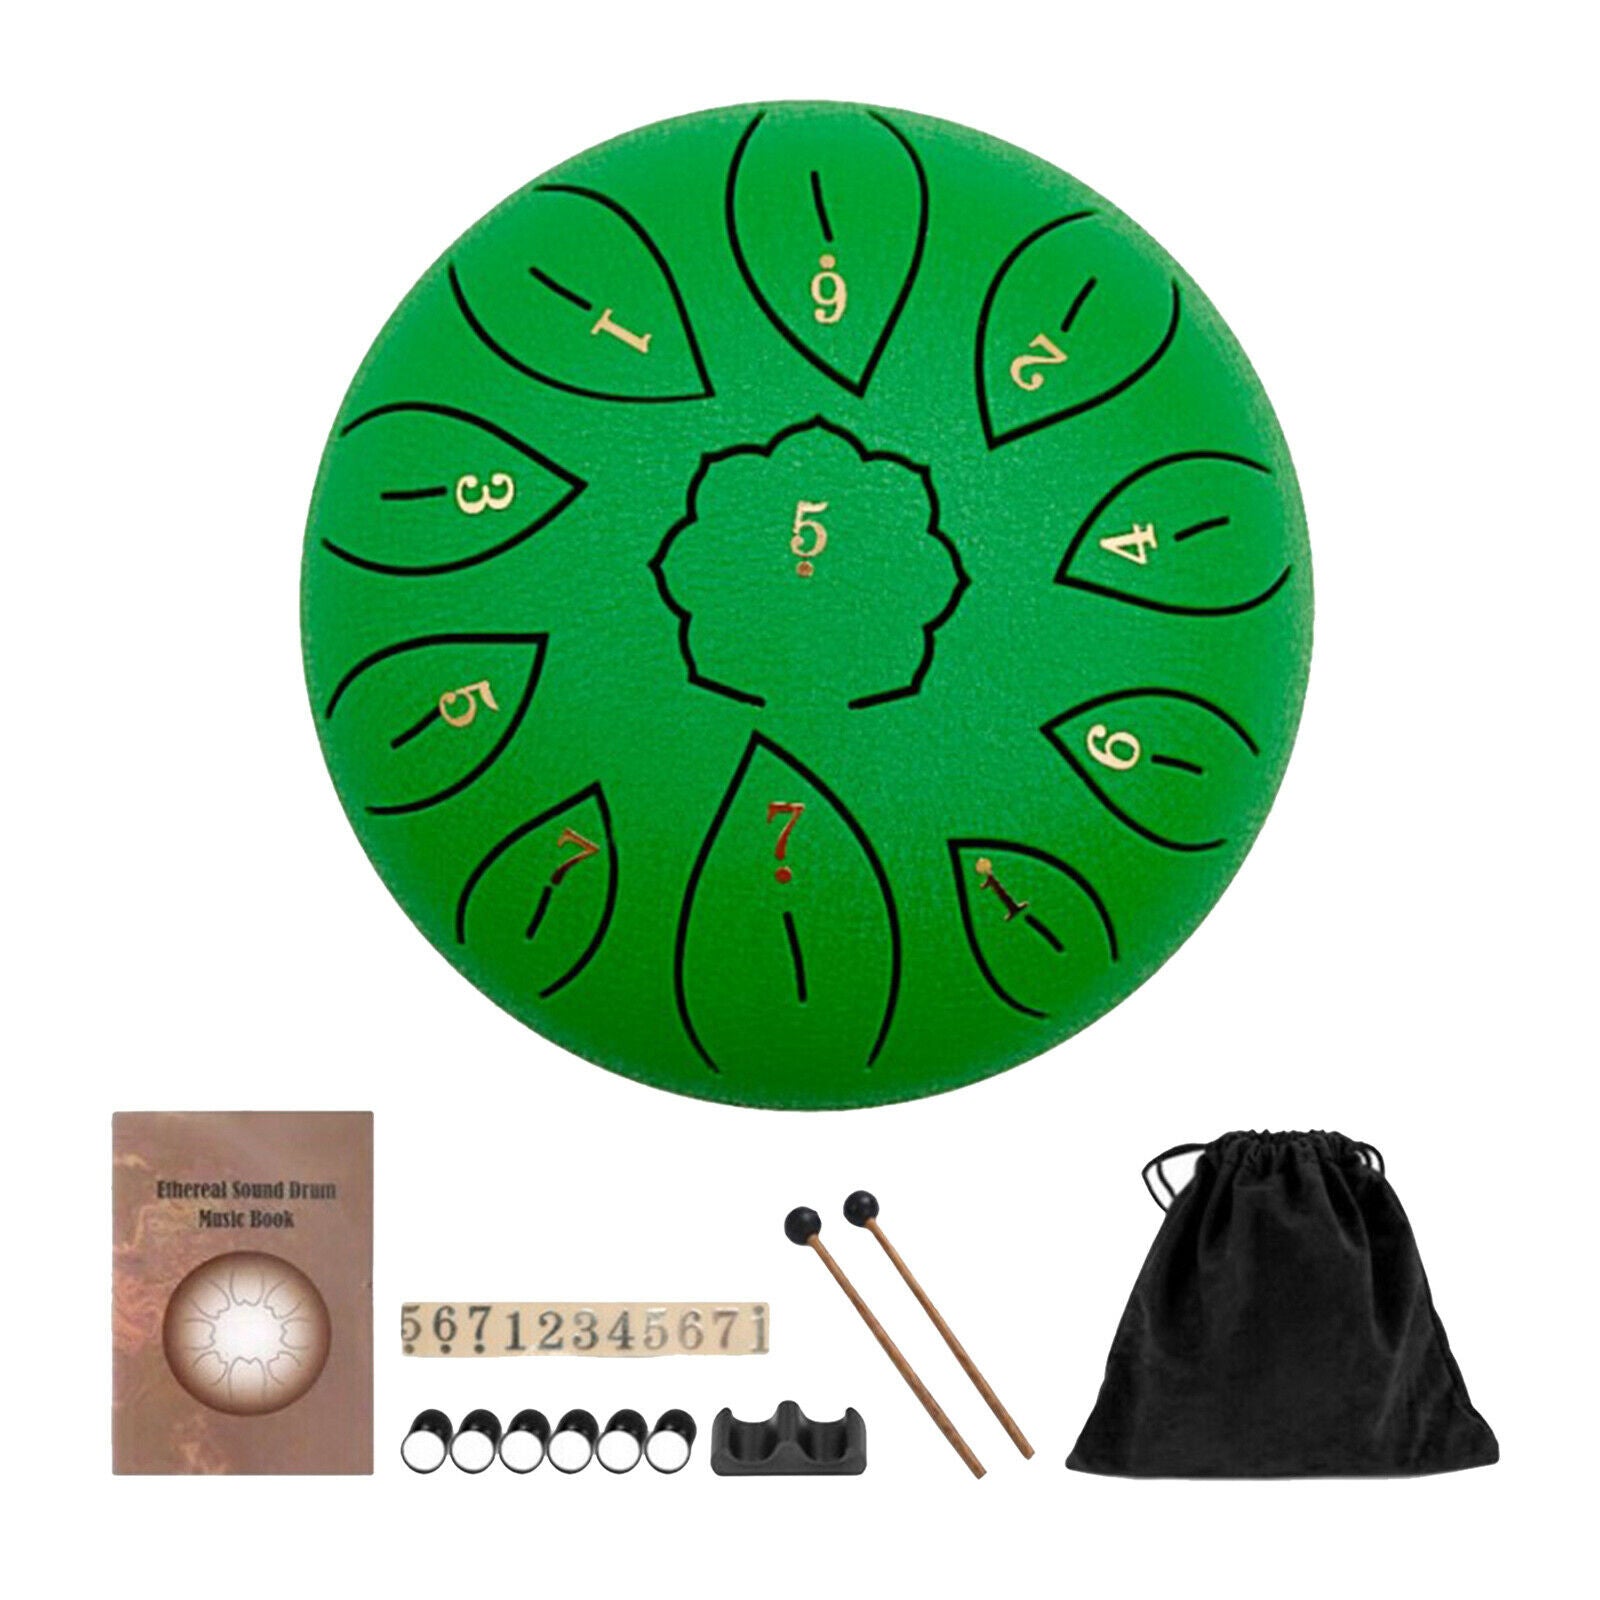 6 Inch Steel Drum Hand Pan & Music Book Yoga Meditation Gift Present green